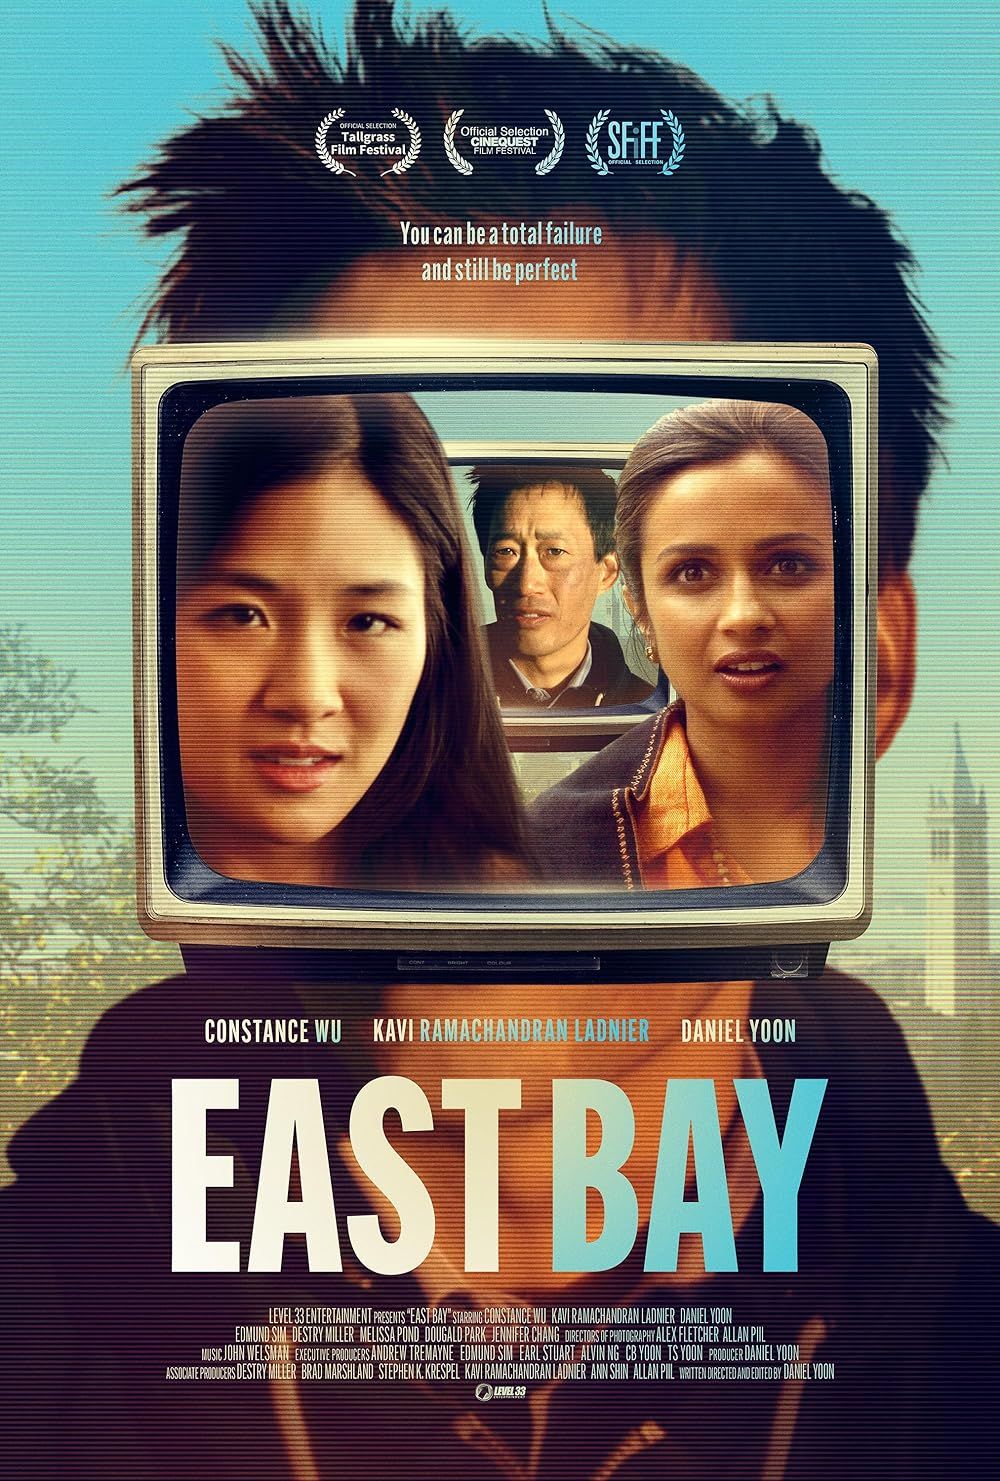 EAST BAY (Film) 